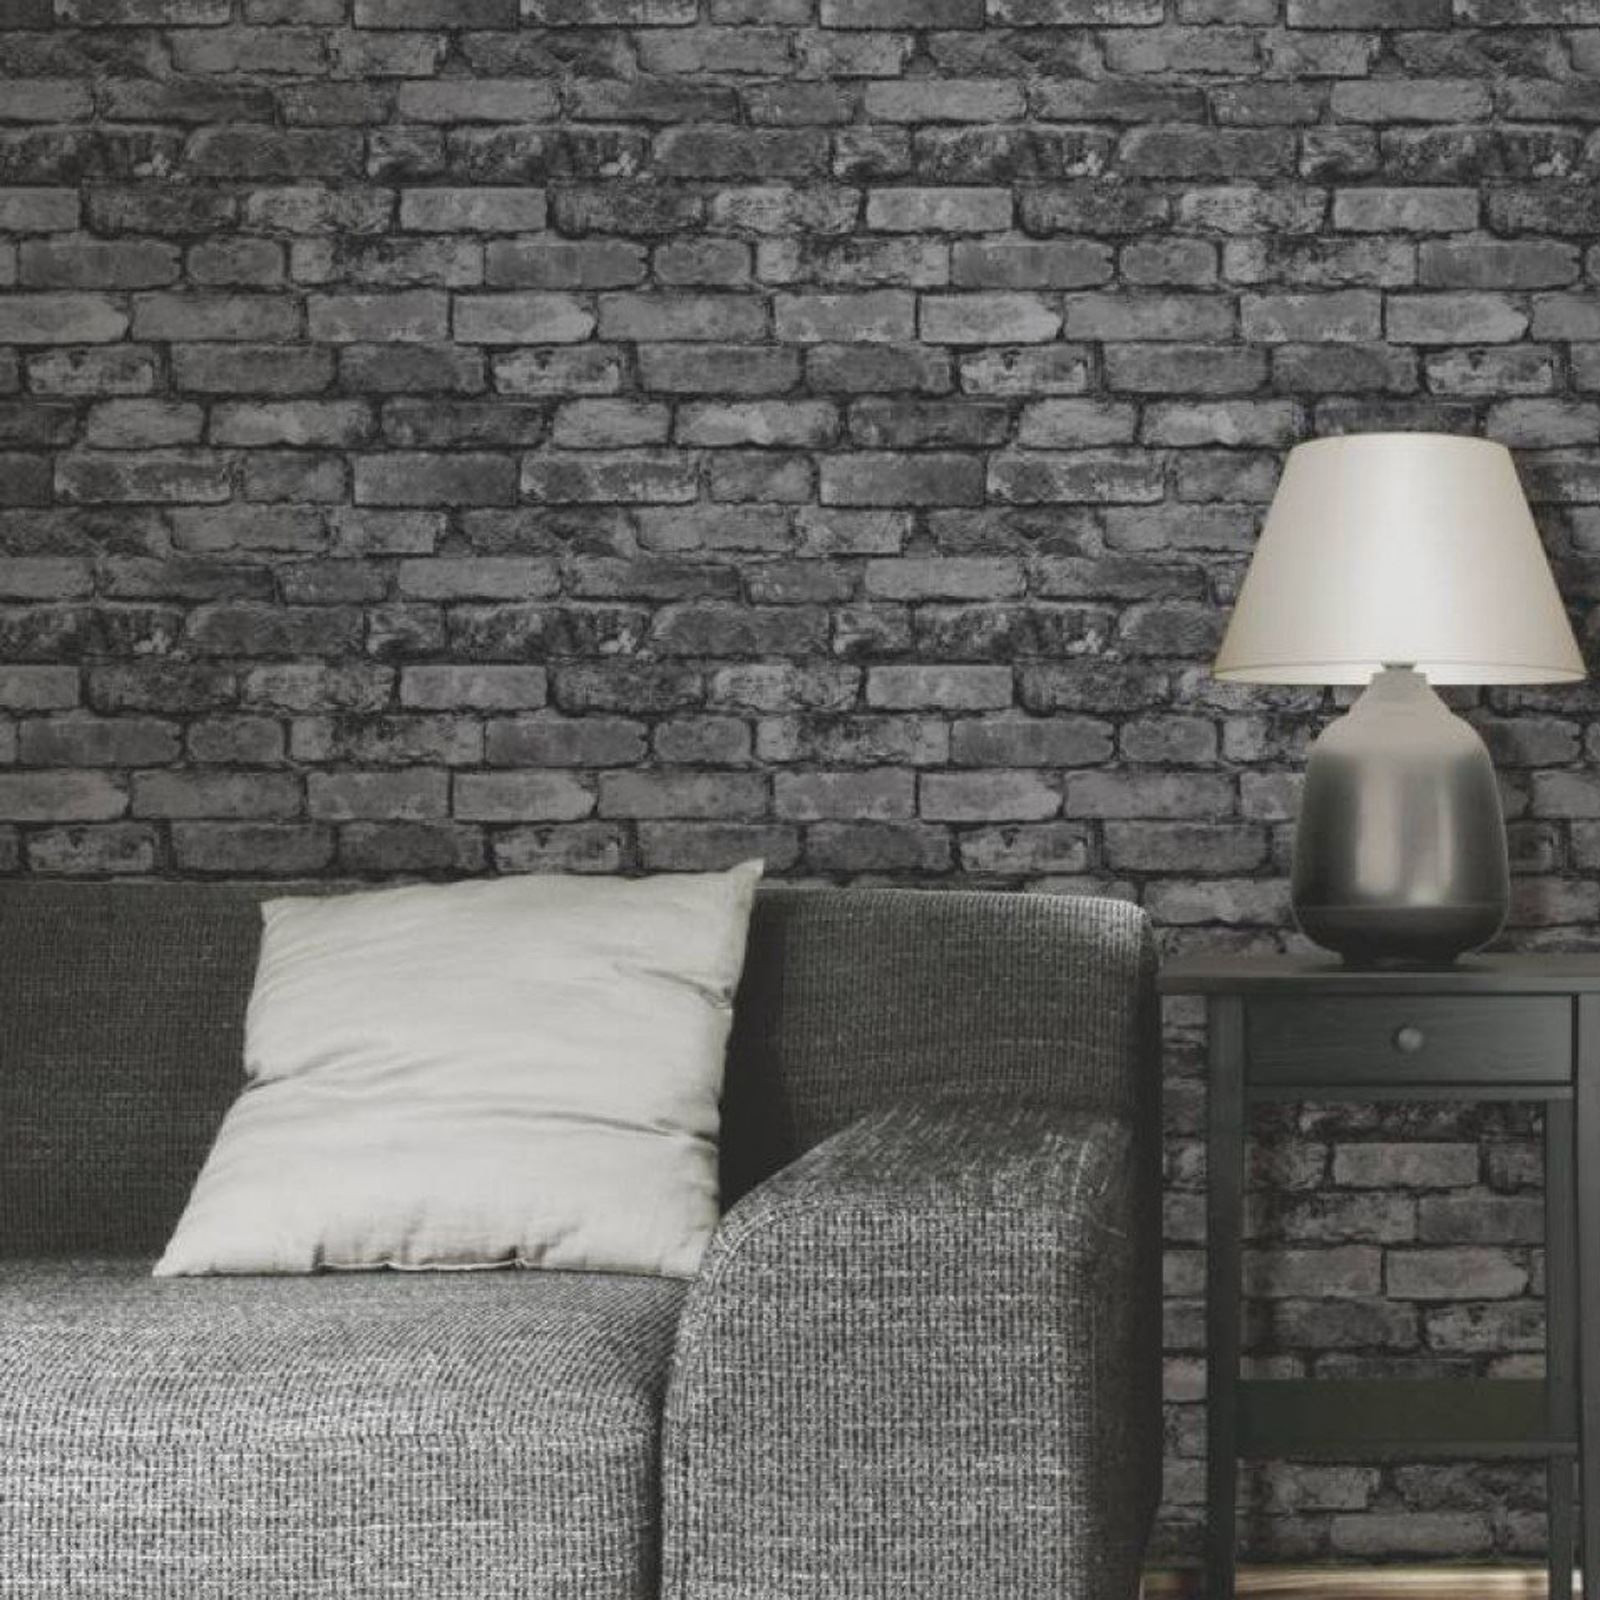 Brick Wallpaper Bedroom
 FINE DECOR RUSTIC BRICK EFFECT WALLPAPERS FEATURE WALL